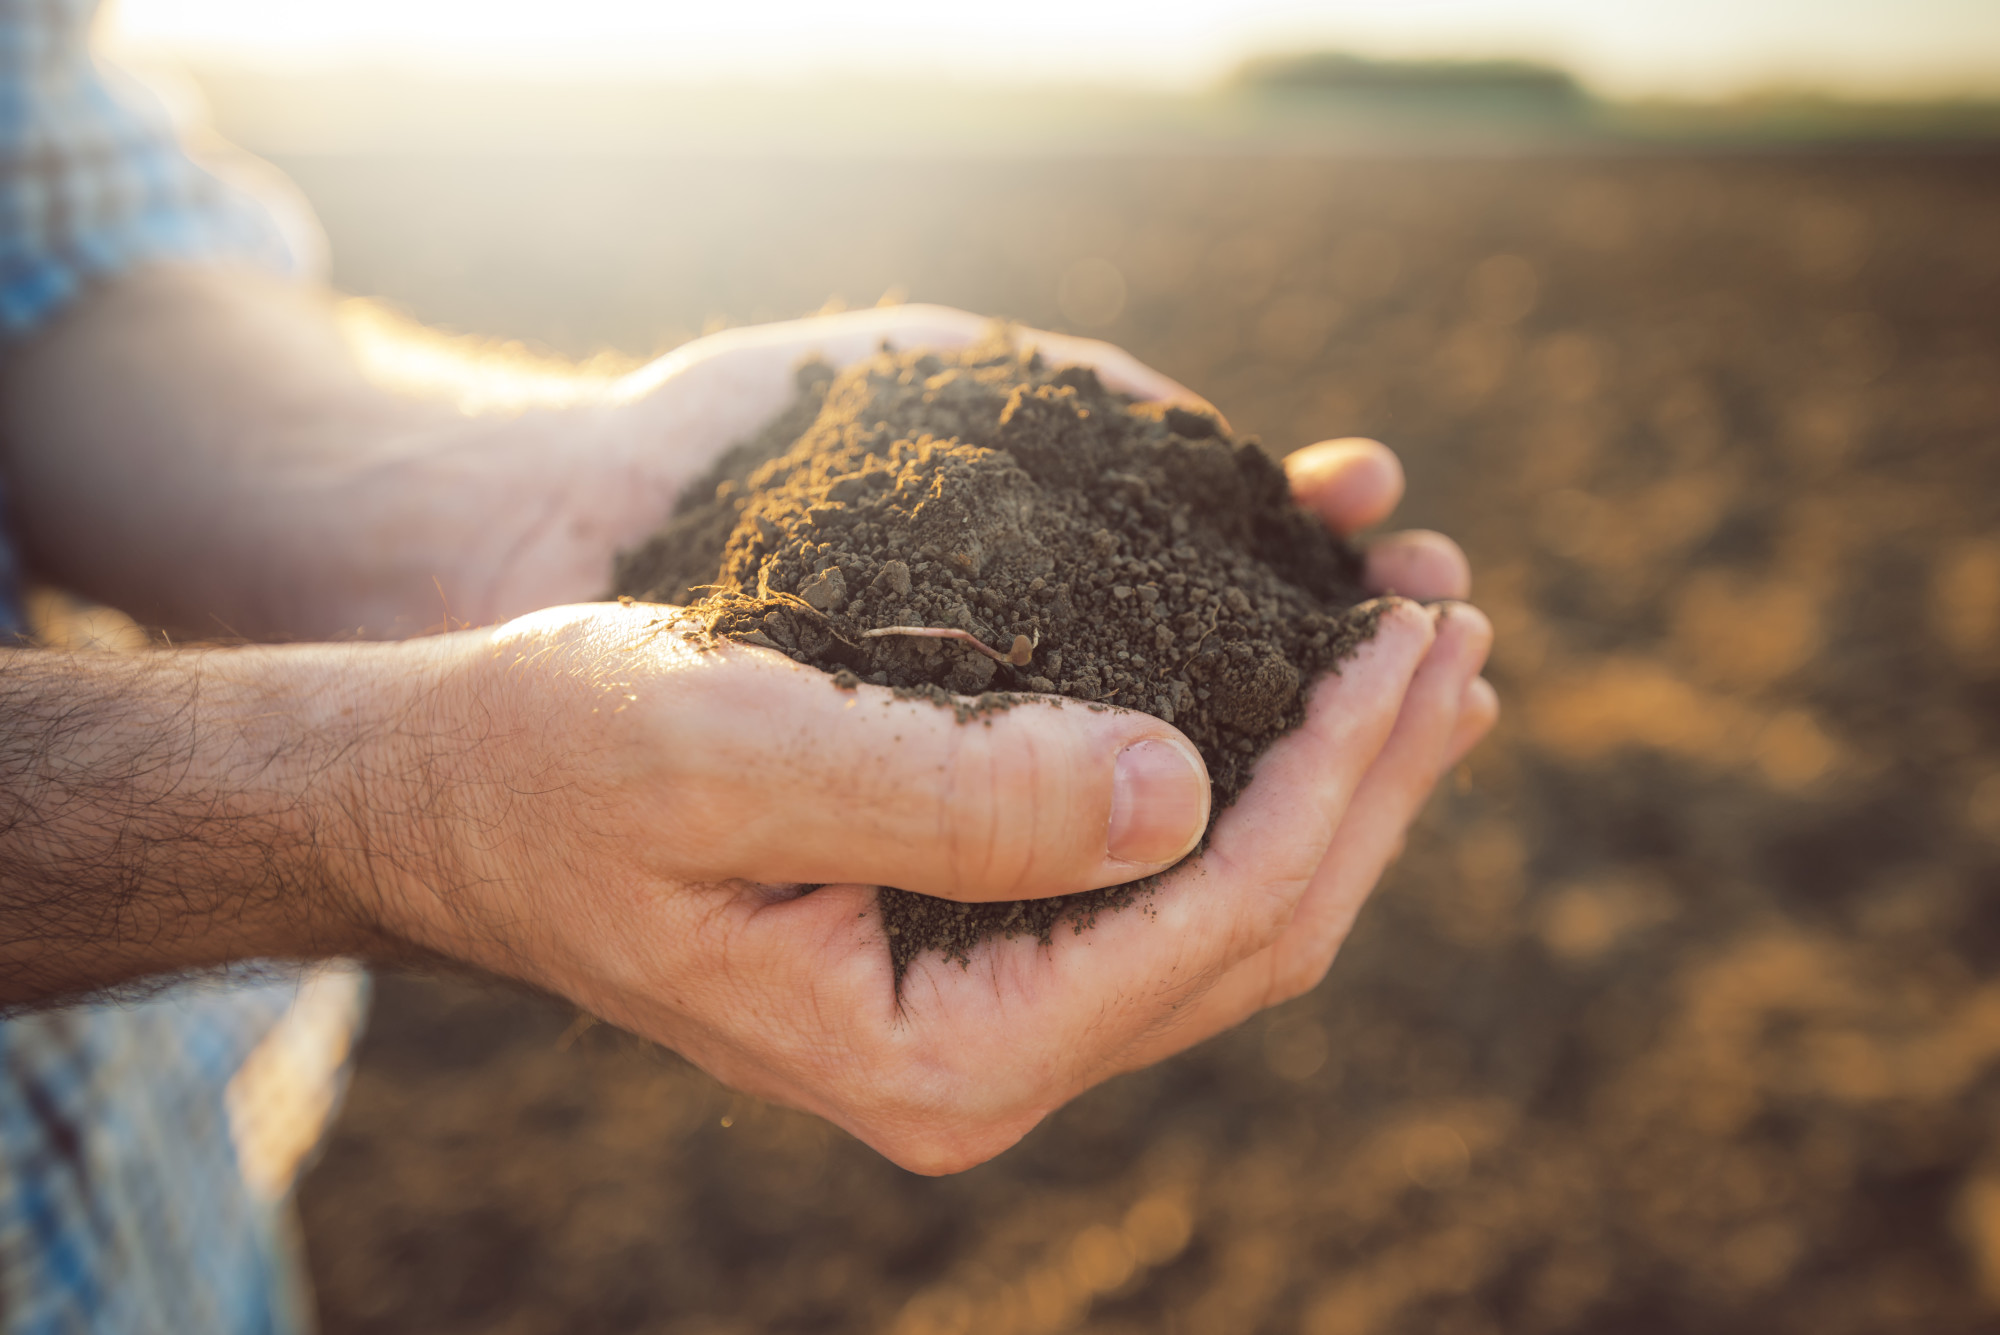 Handful of arable soil in hands of responsible farmer